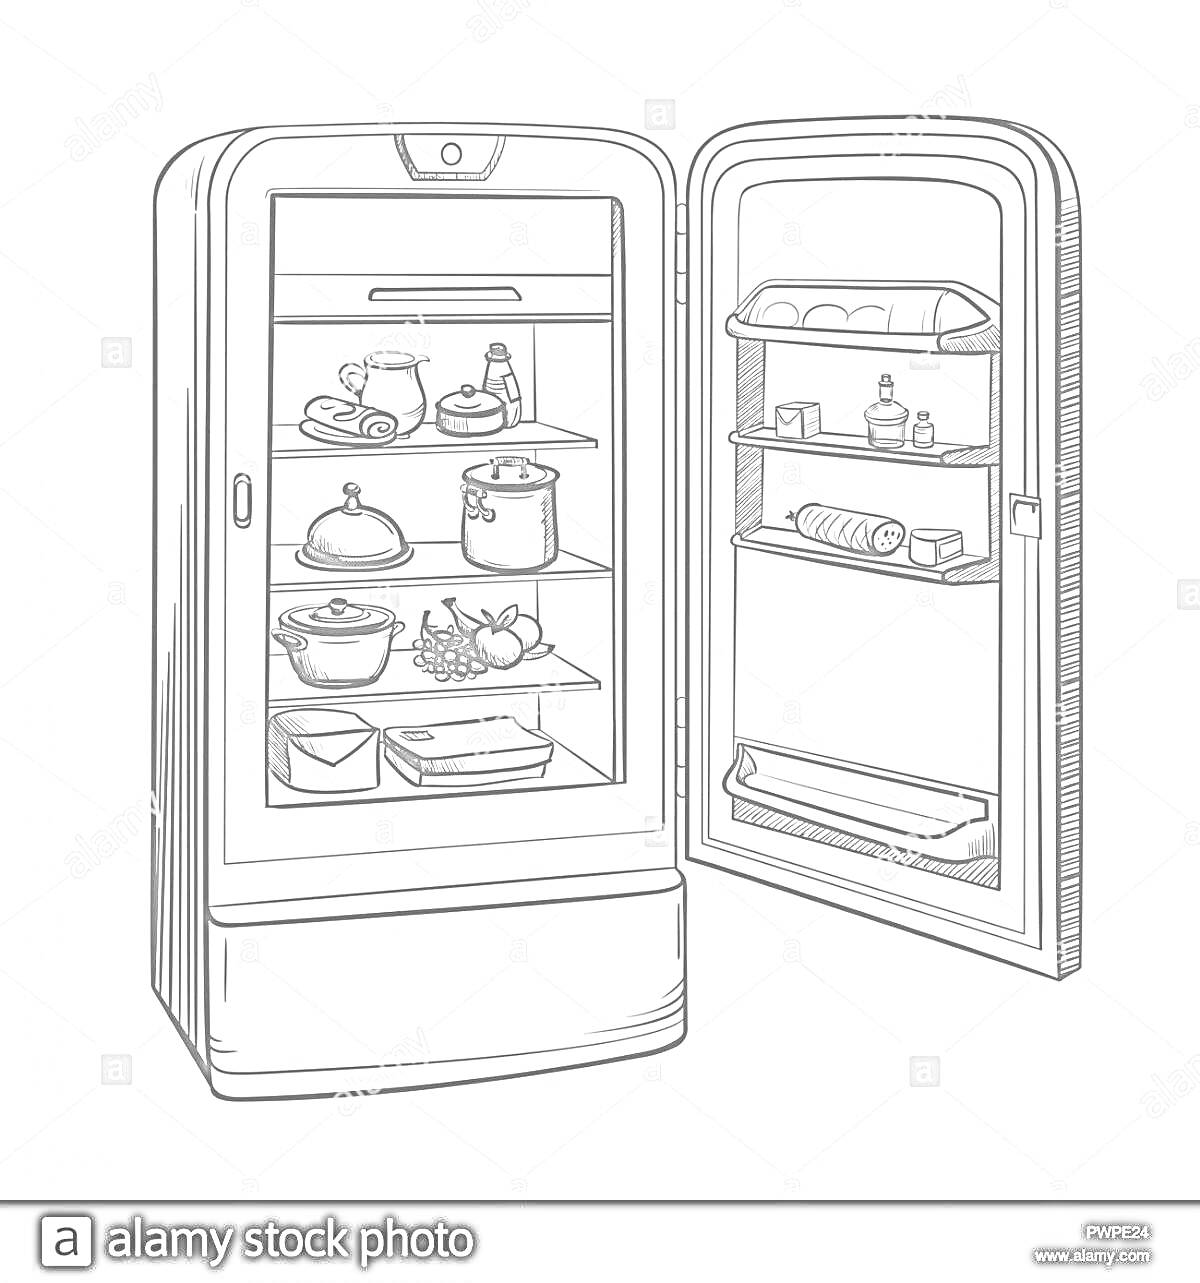 На раскраске изображено: Холодильник, Чашки, Банка, Еда, Фрукты, Бутылка, Контейнер, Кастрюли, Чайники